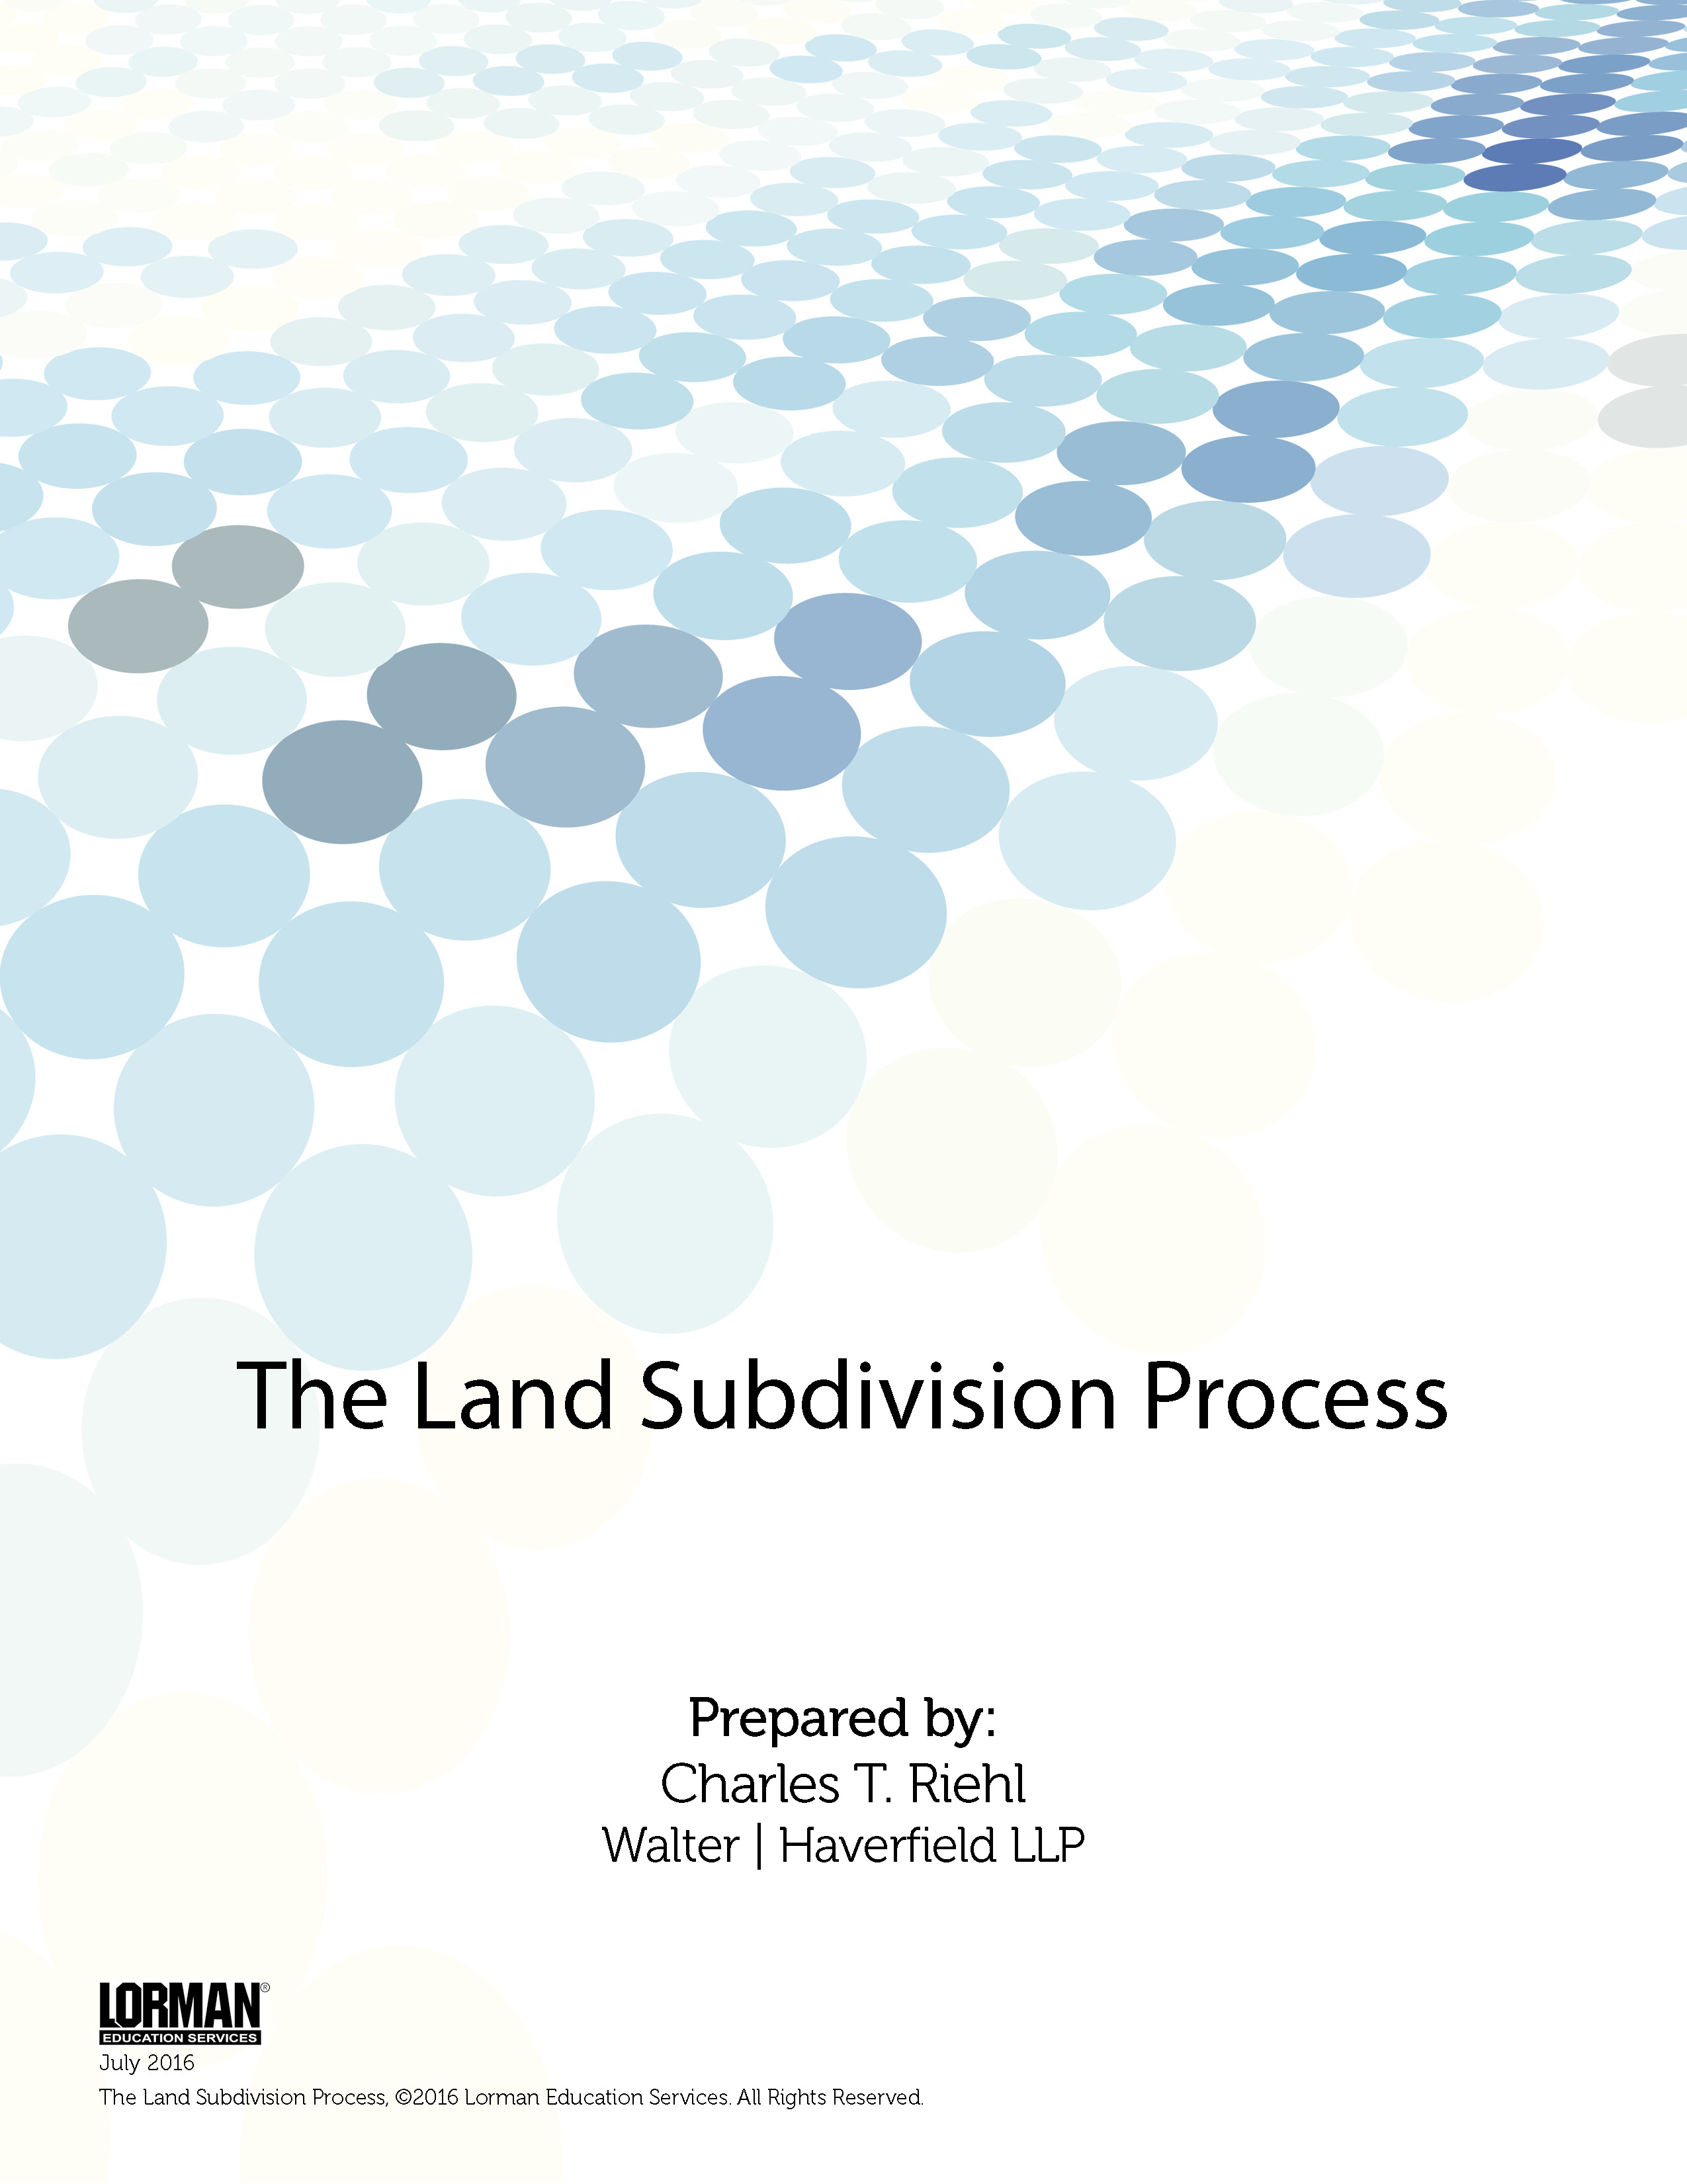 The Land Subdivision Process in Ohio